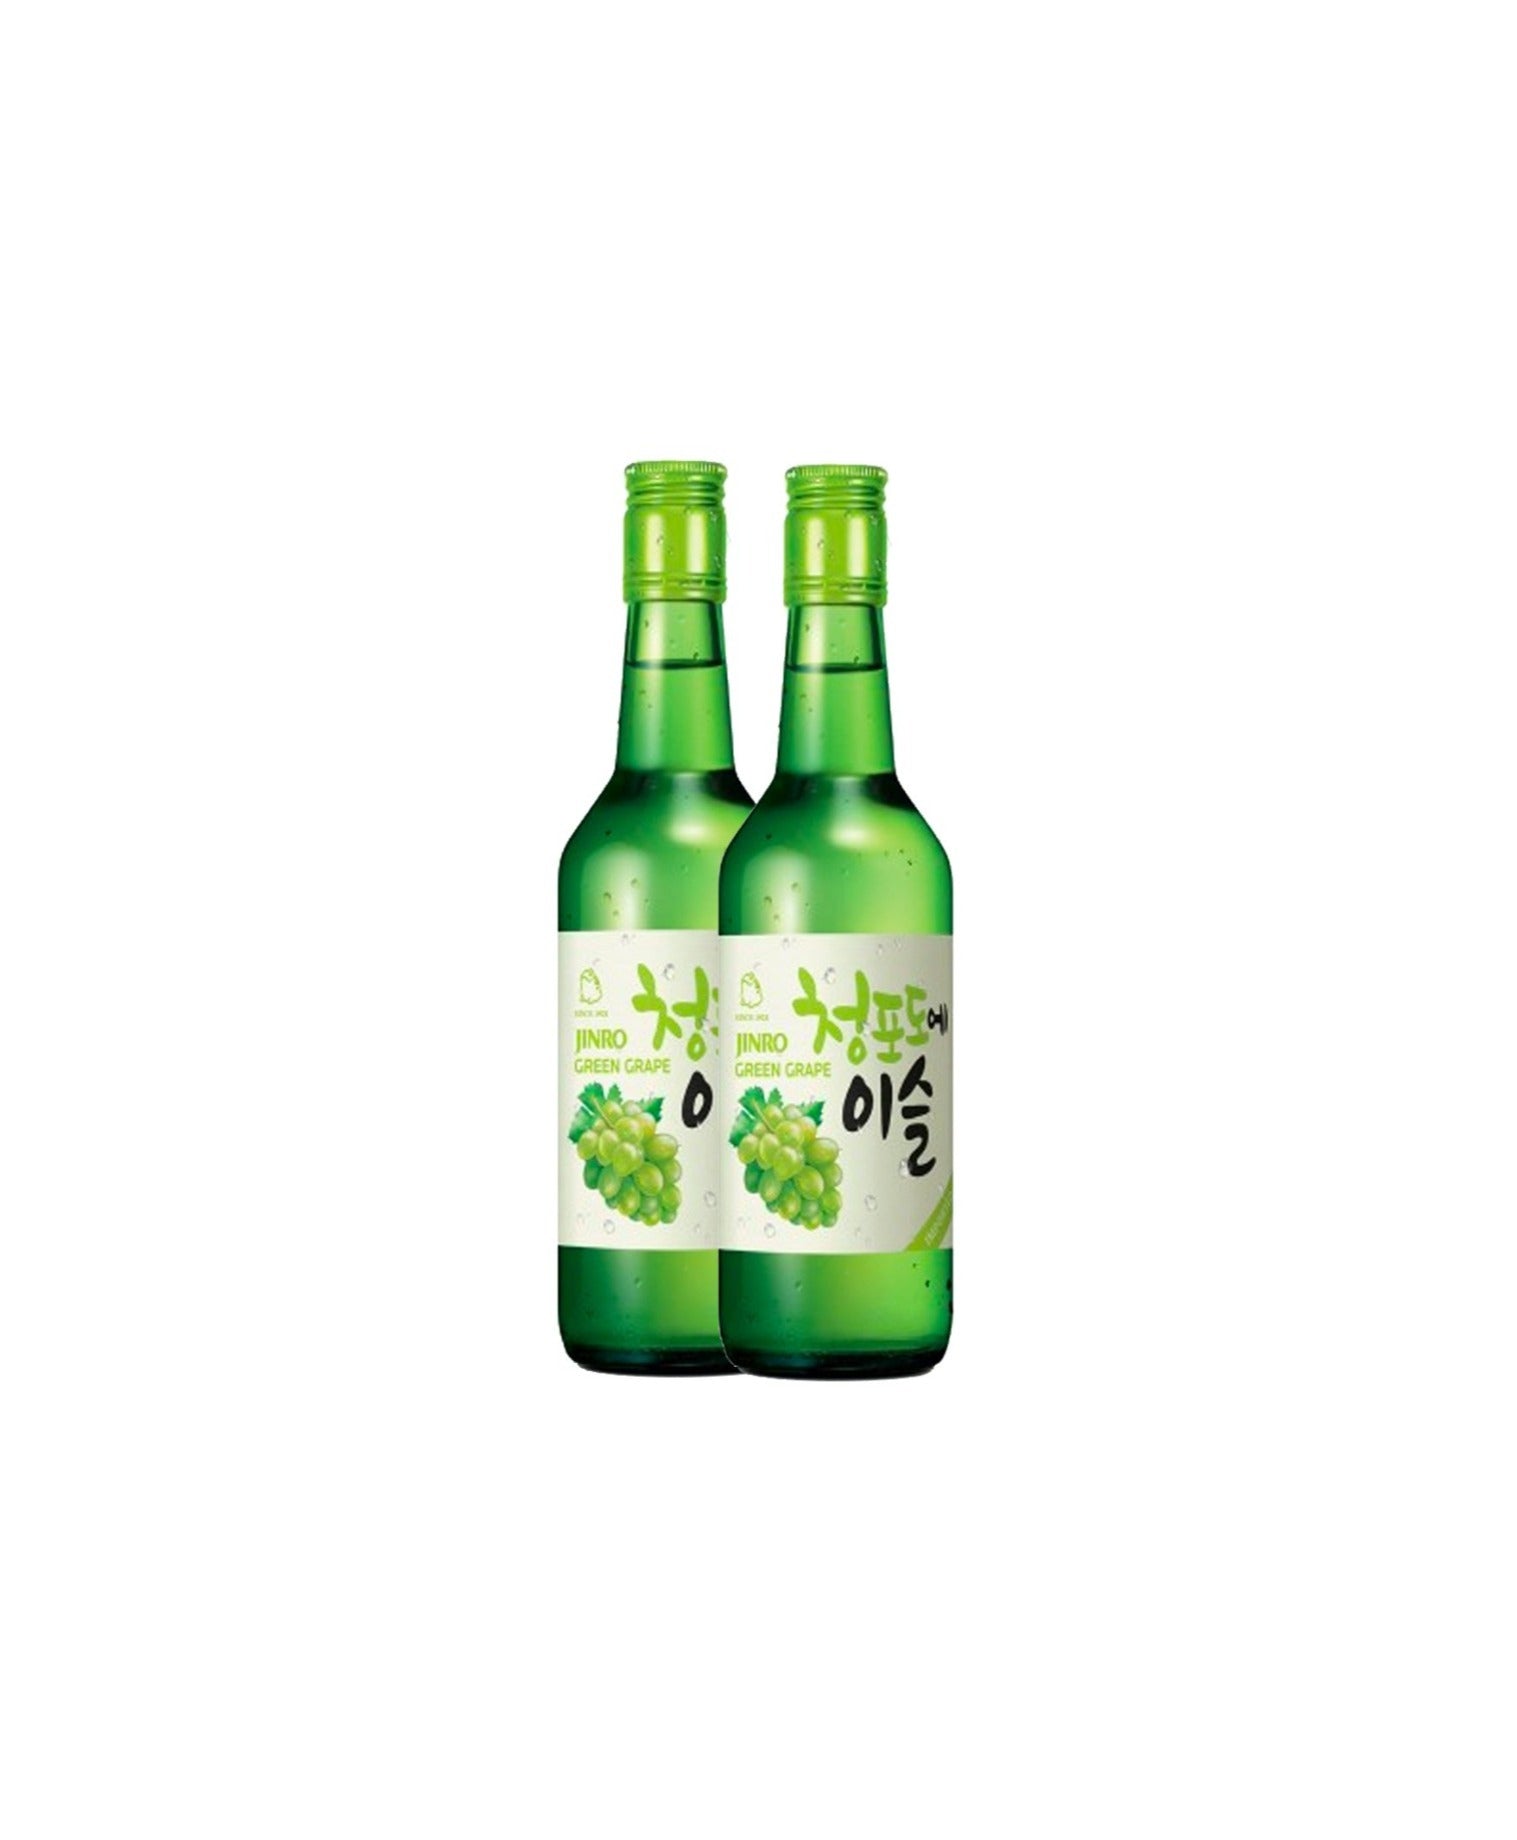 Chamisul Jinro Green Grape Soju (2 x 360ml)